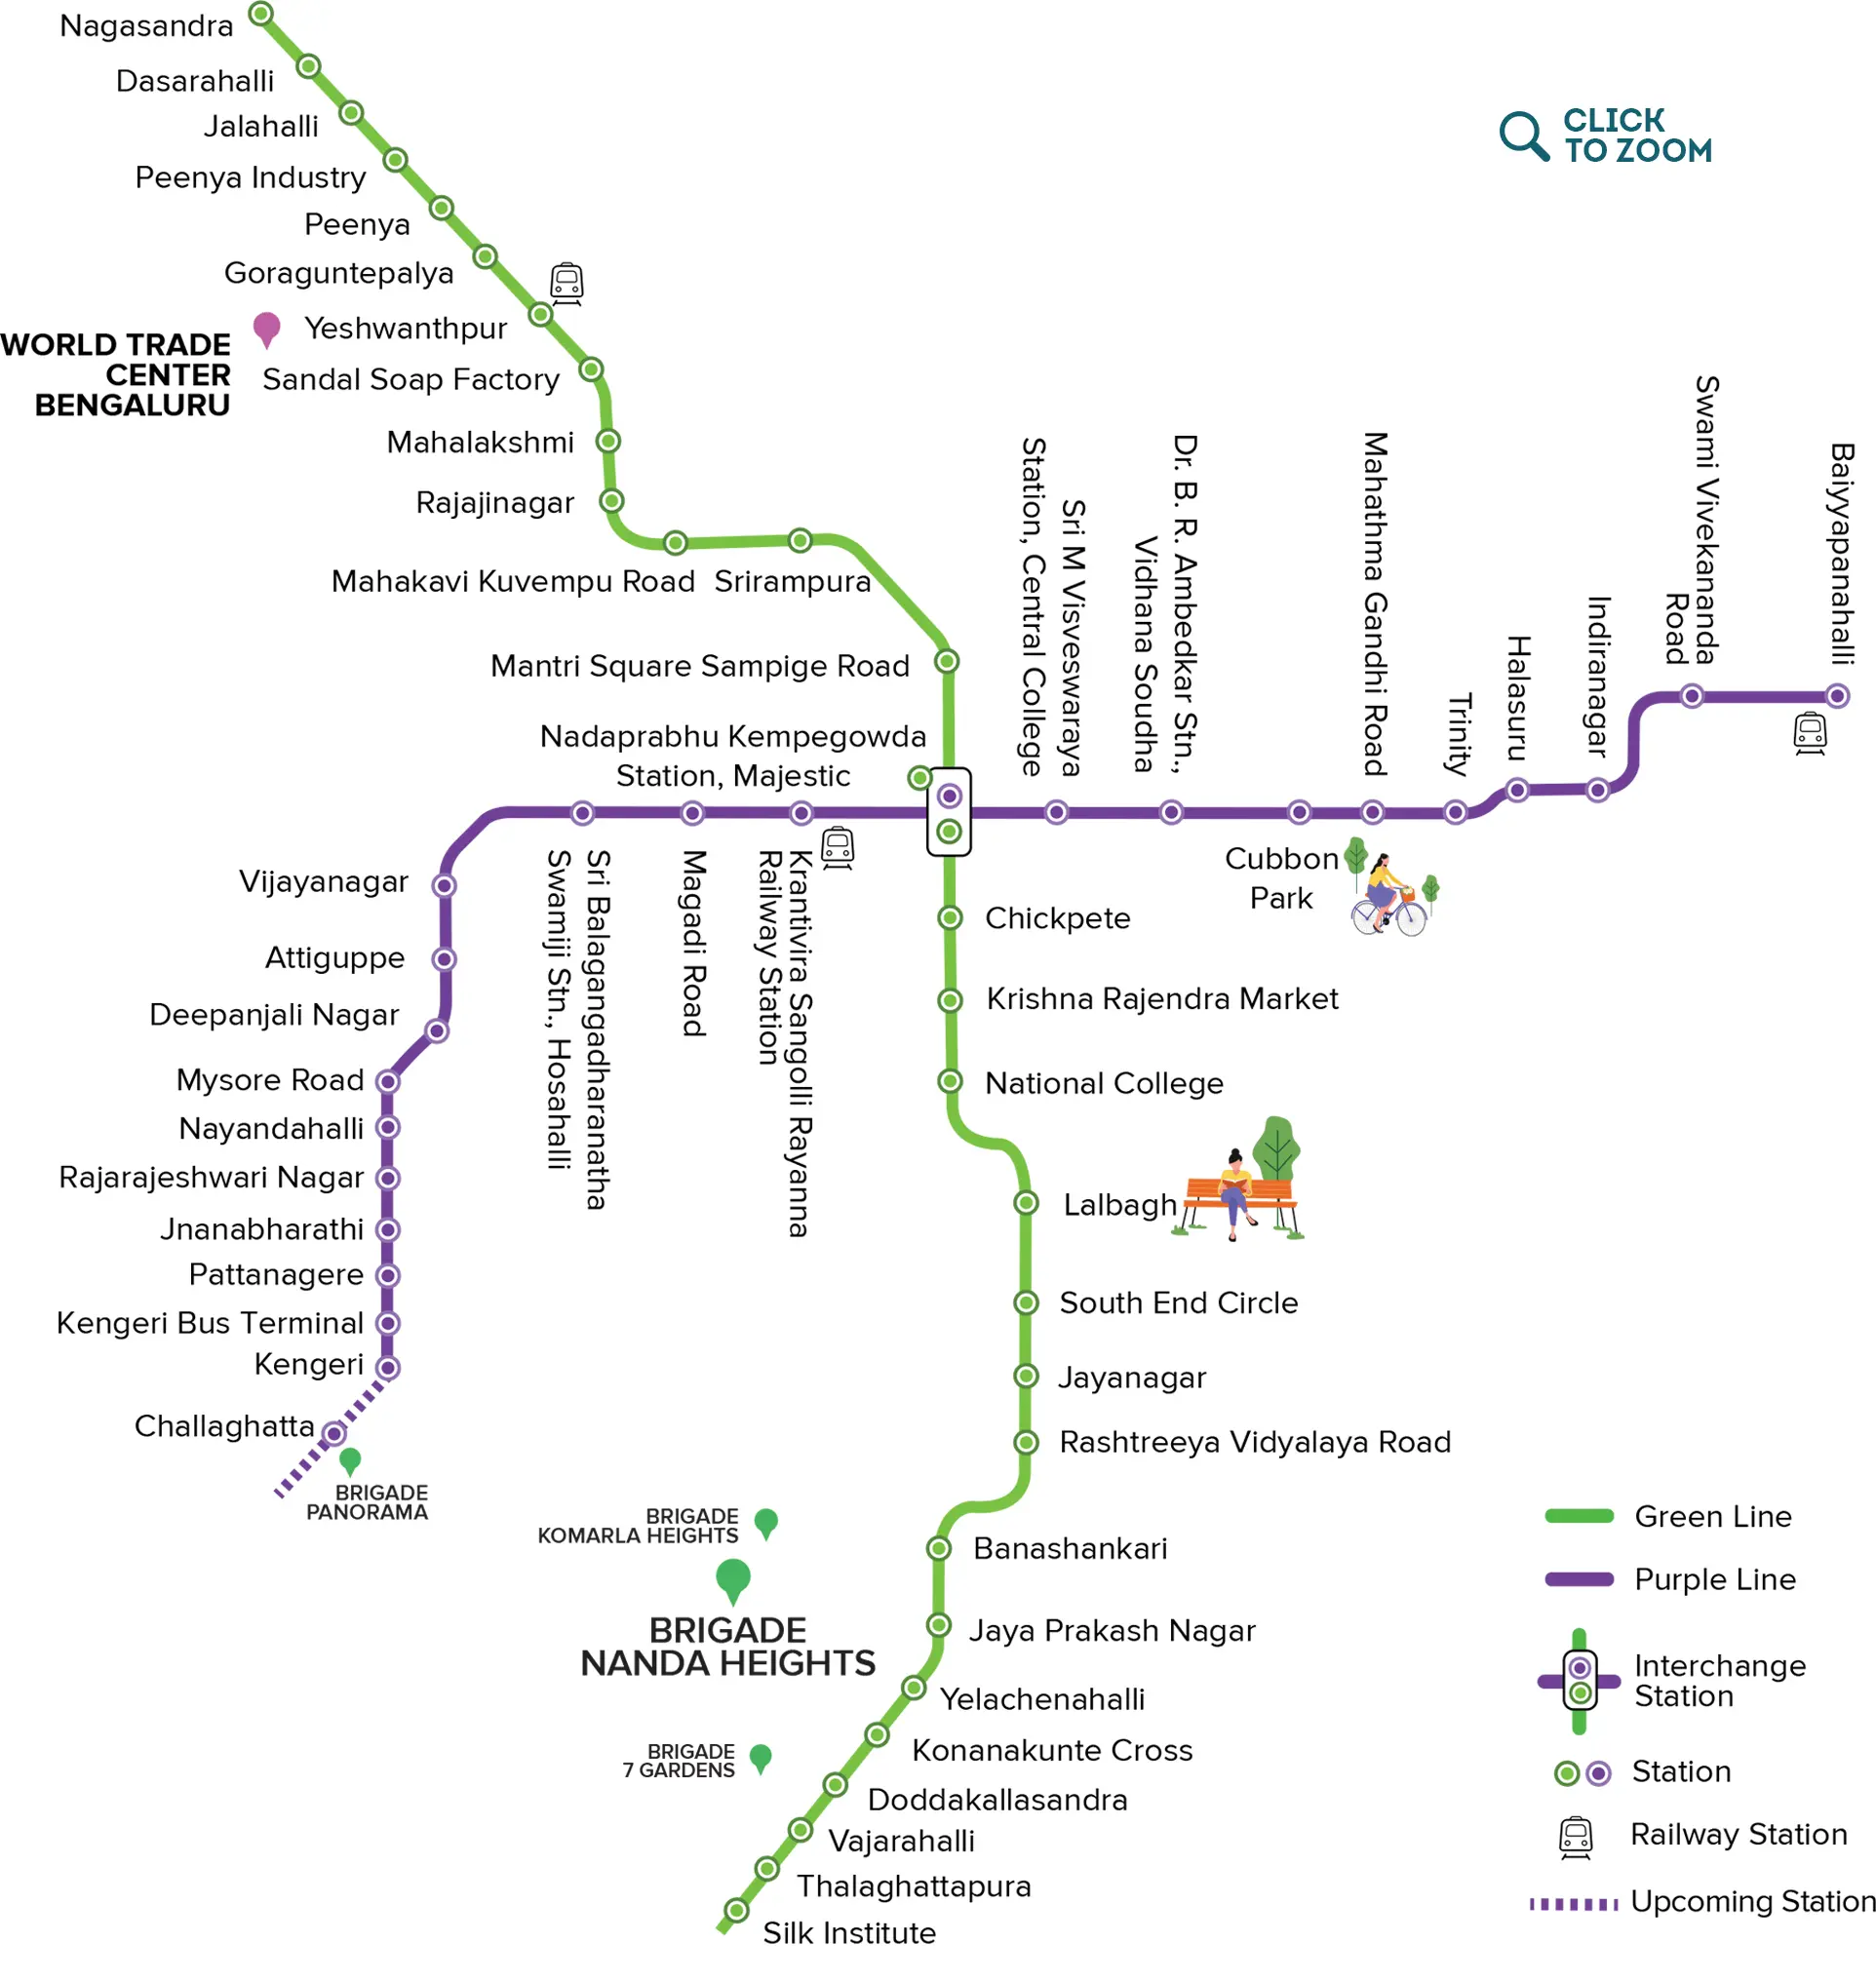 Brigade Nanda Heights metro map connectivity